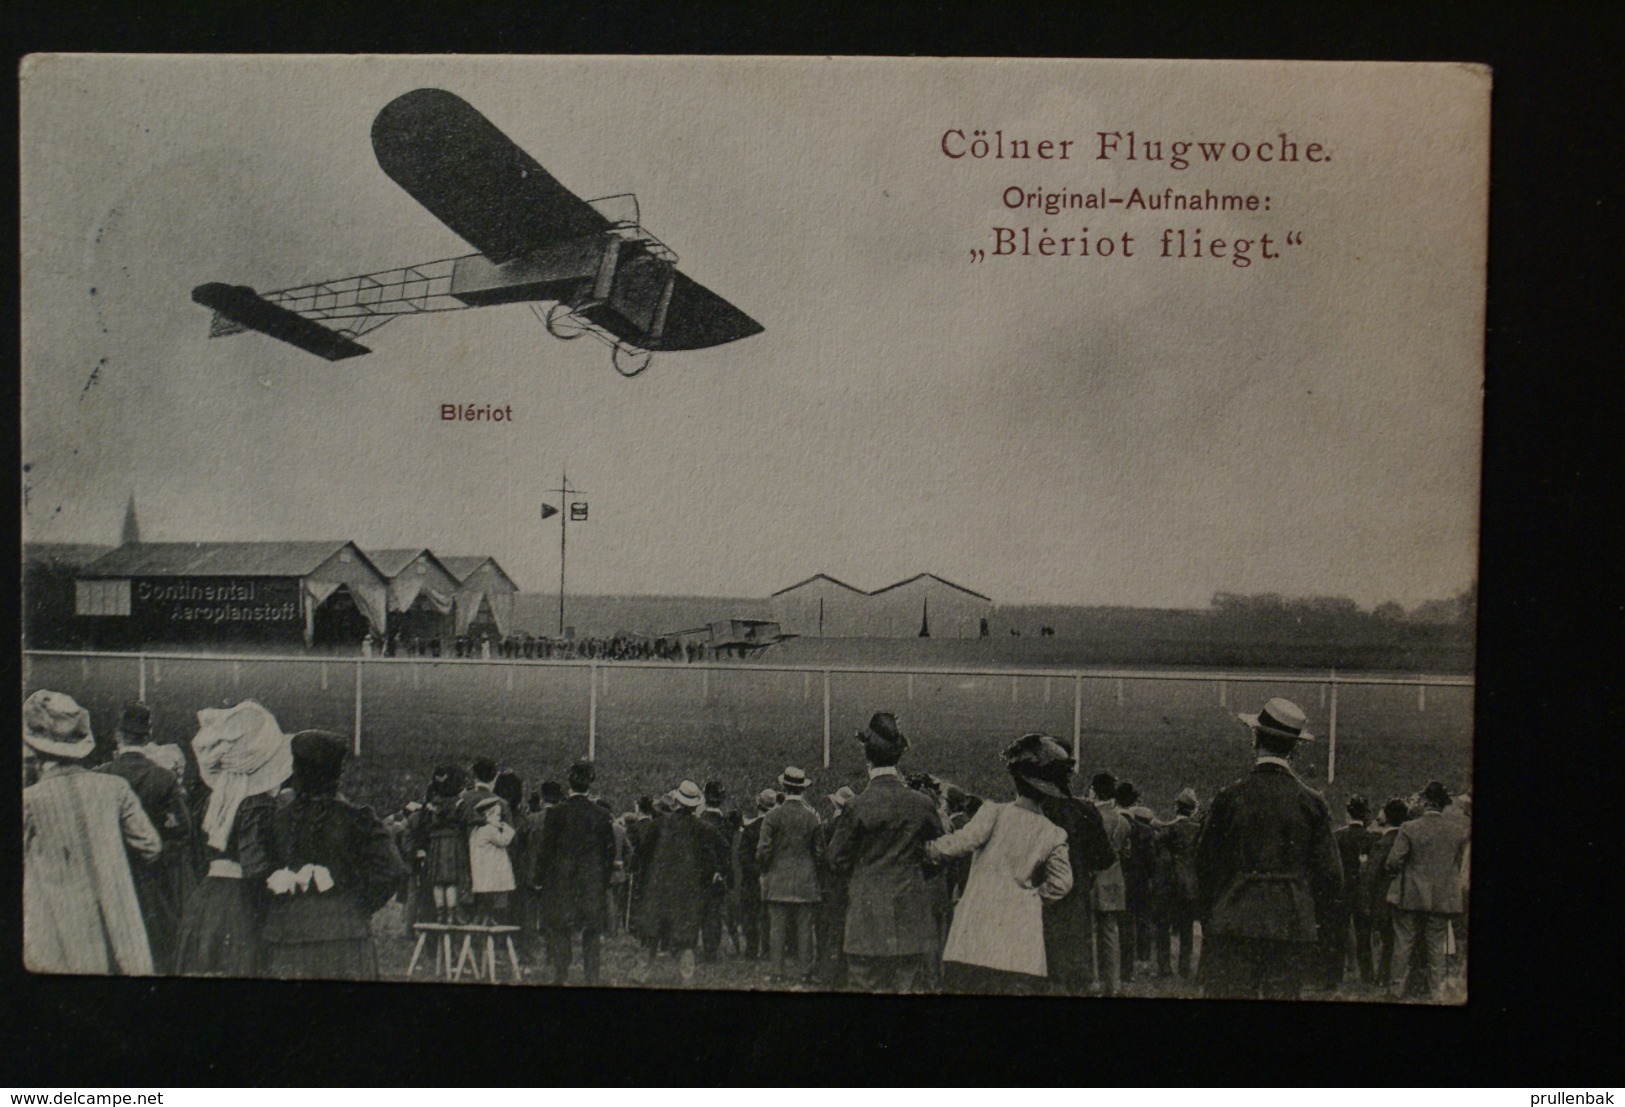 Colner Flugwoche / Blériot Fliegt - Demonstraties